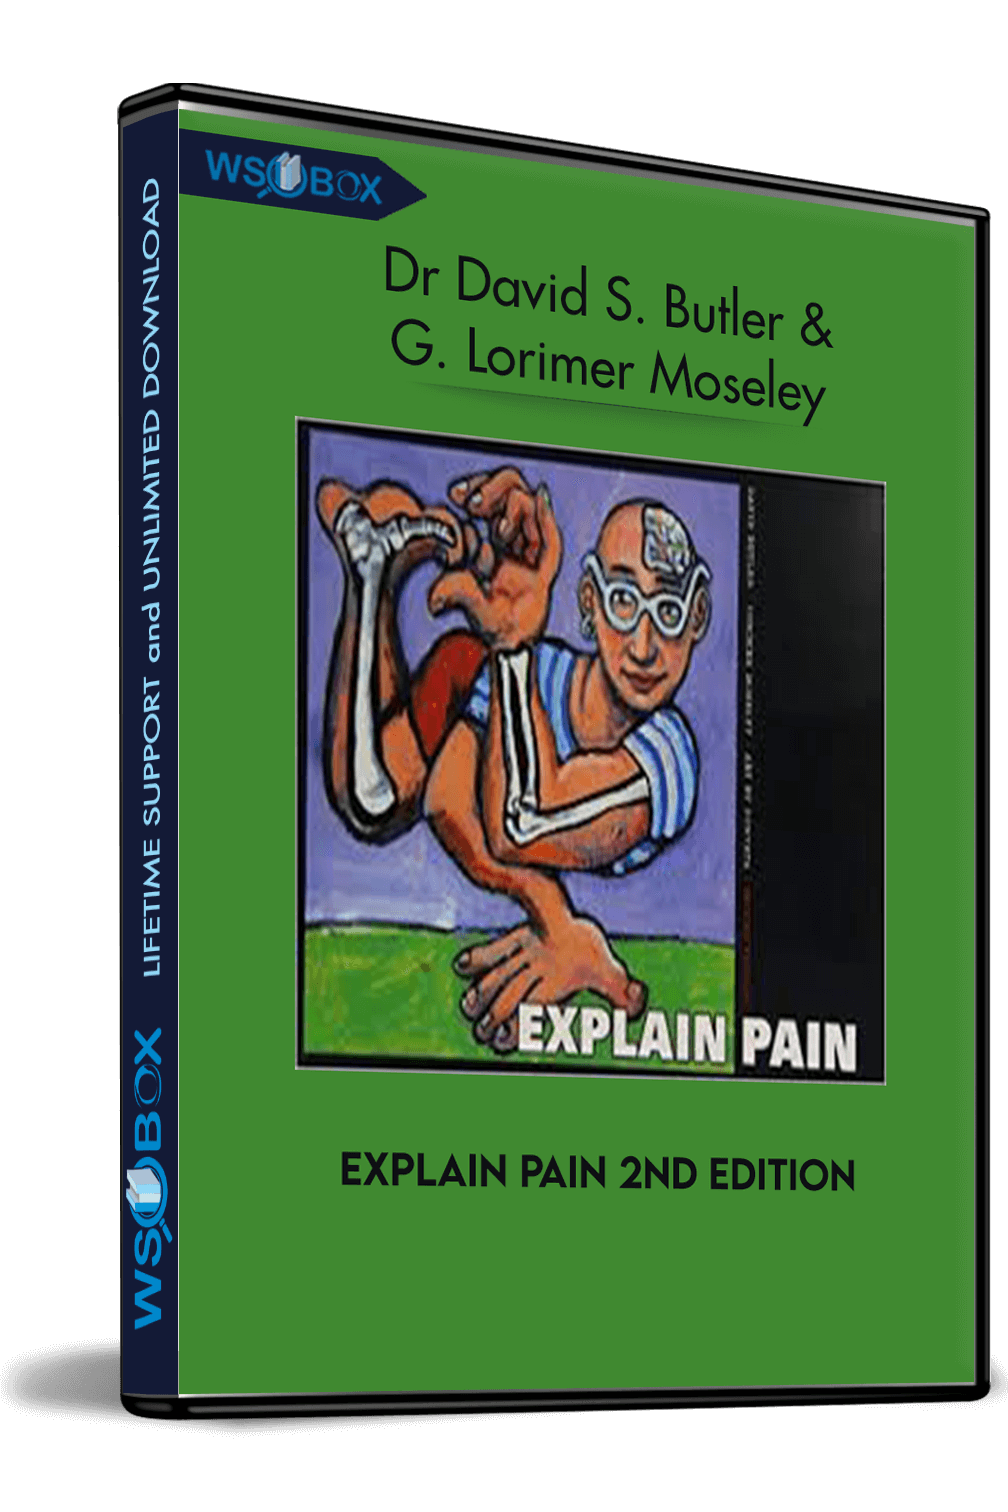 Explain Pain 2nd edition – Dr David S. Butler & G. Lorimer Moseley